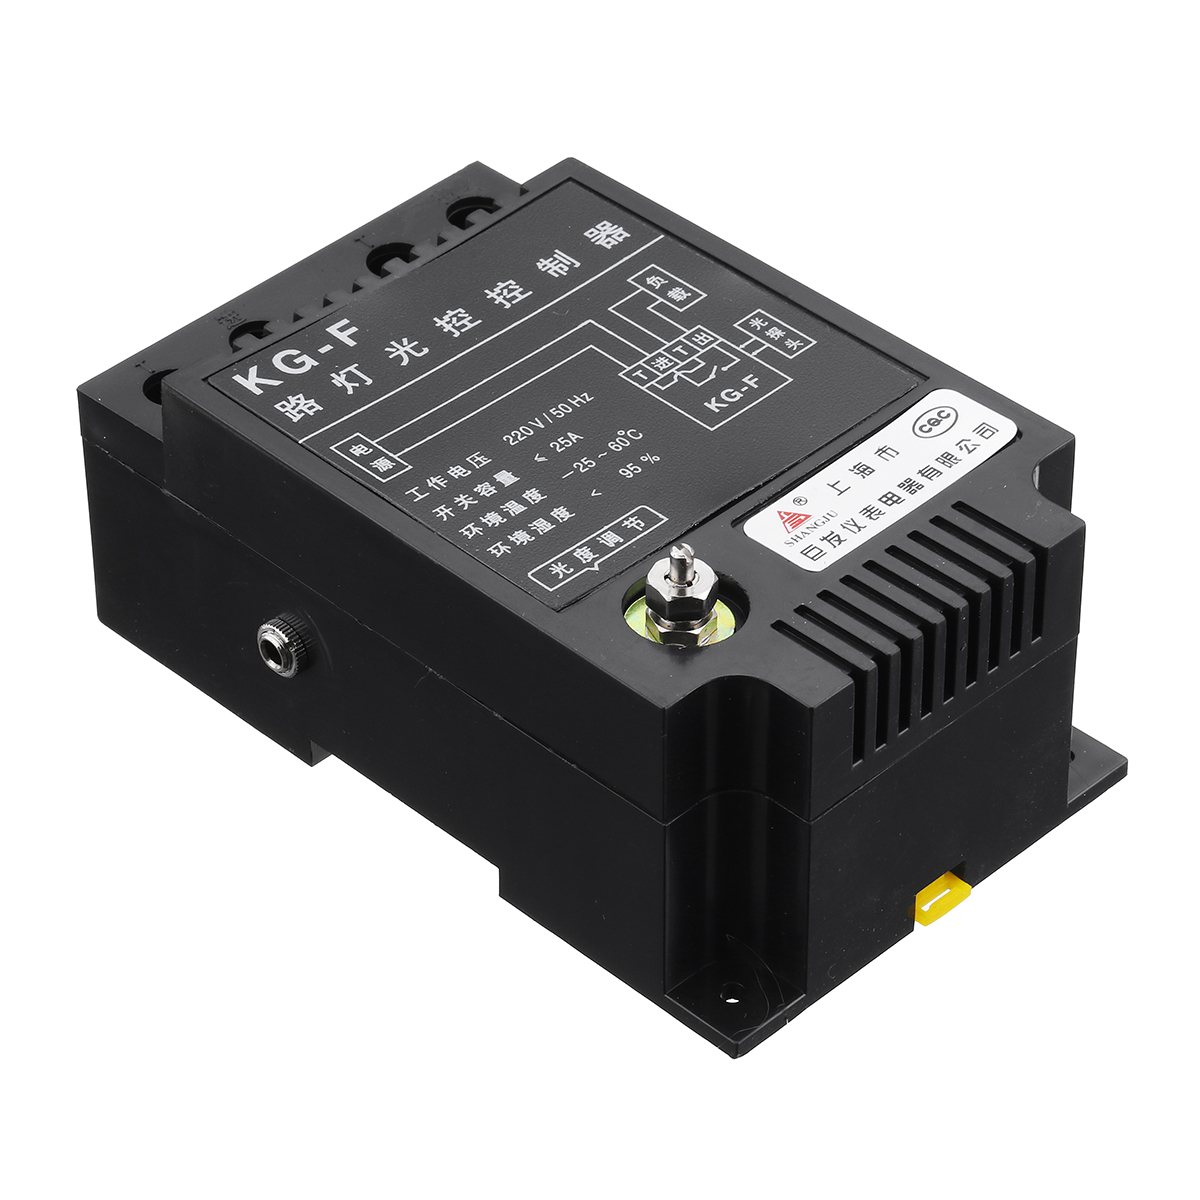 KG-F-220V-Light-Control-Switch-Automatic-Corridor-Light-Sensor-Adjustable-Intelligent-Street-Lamp-Co-1420007-5